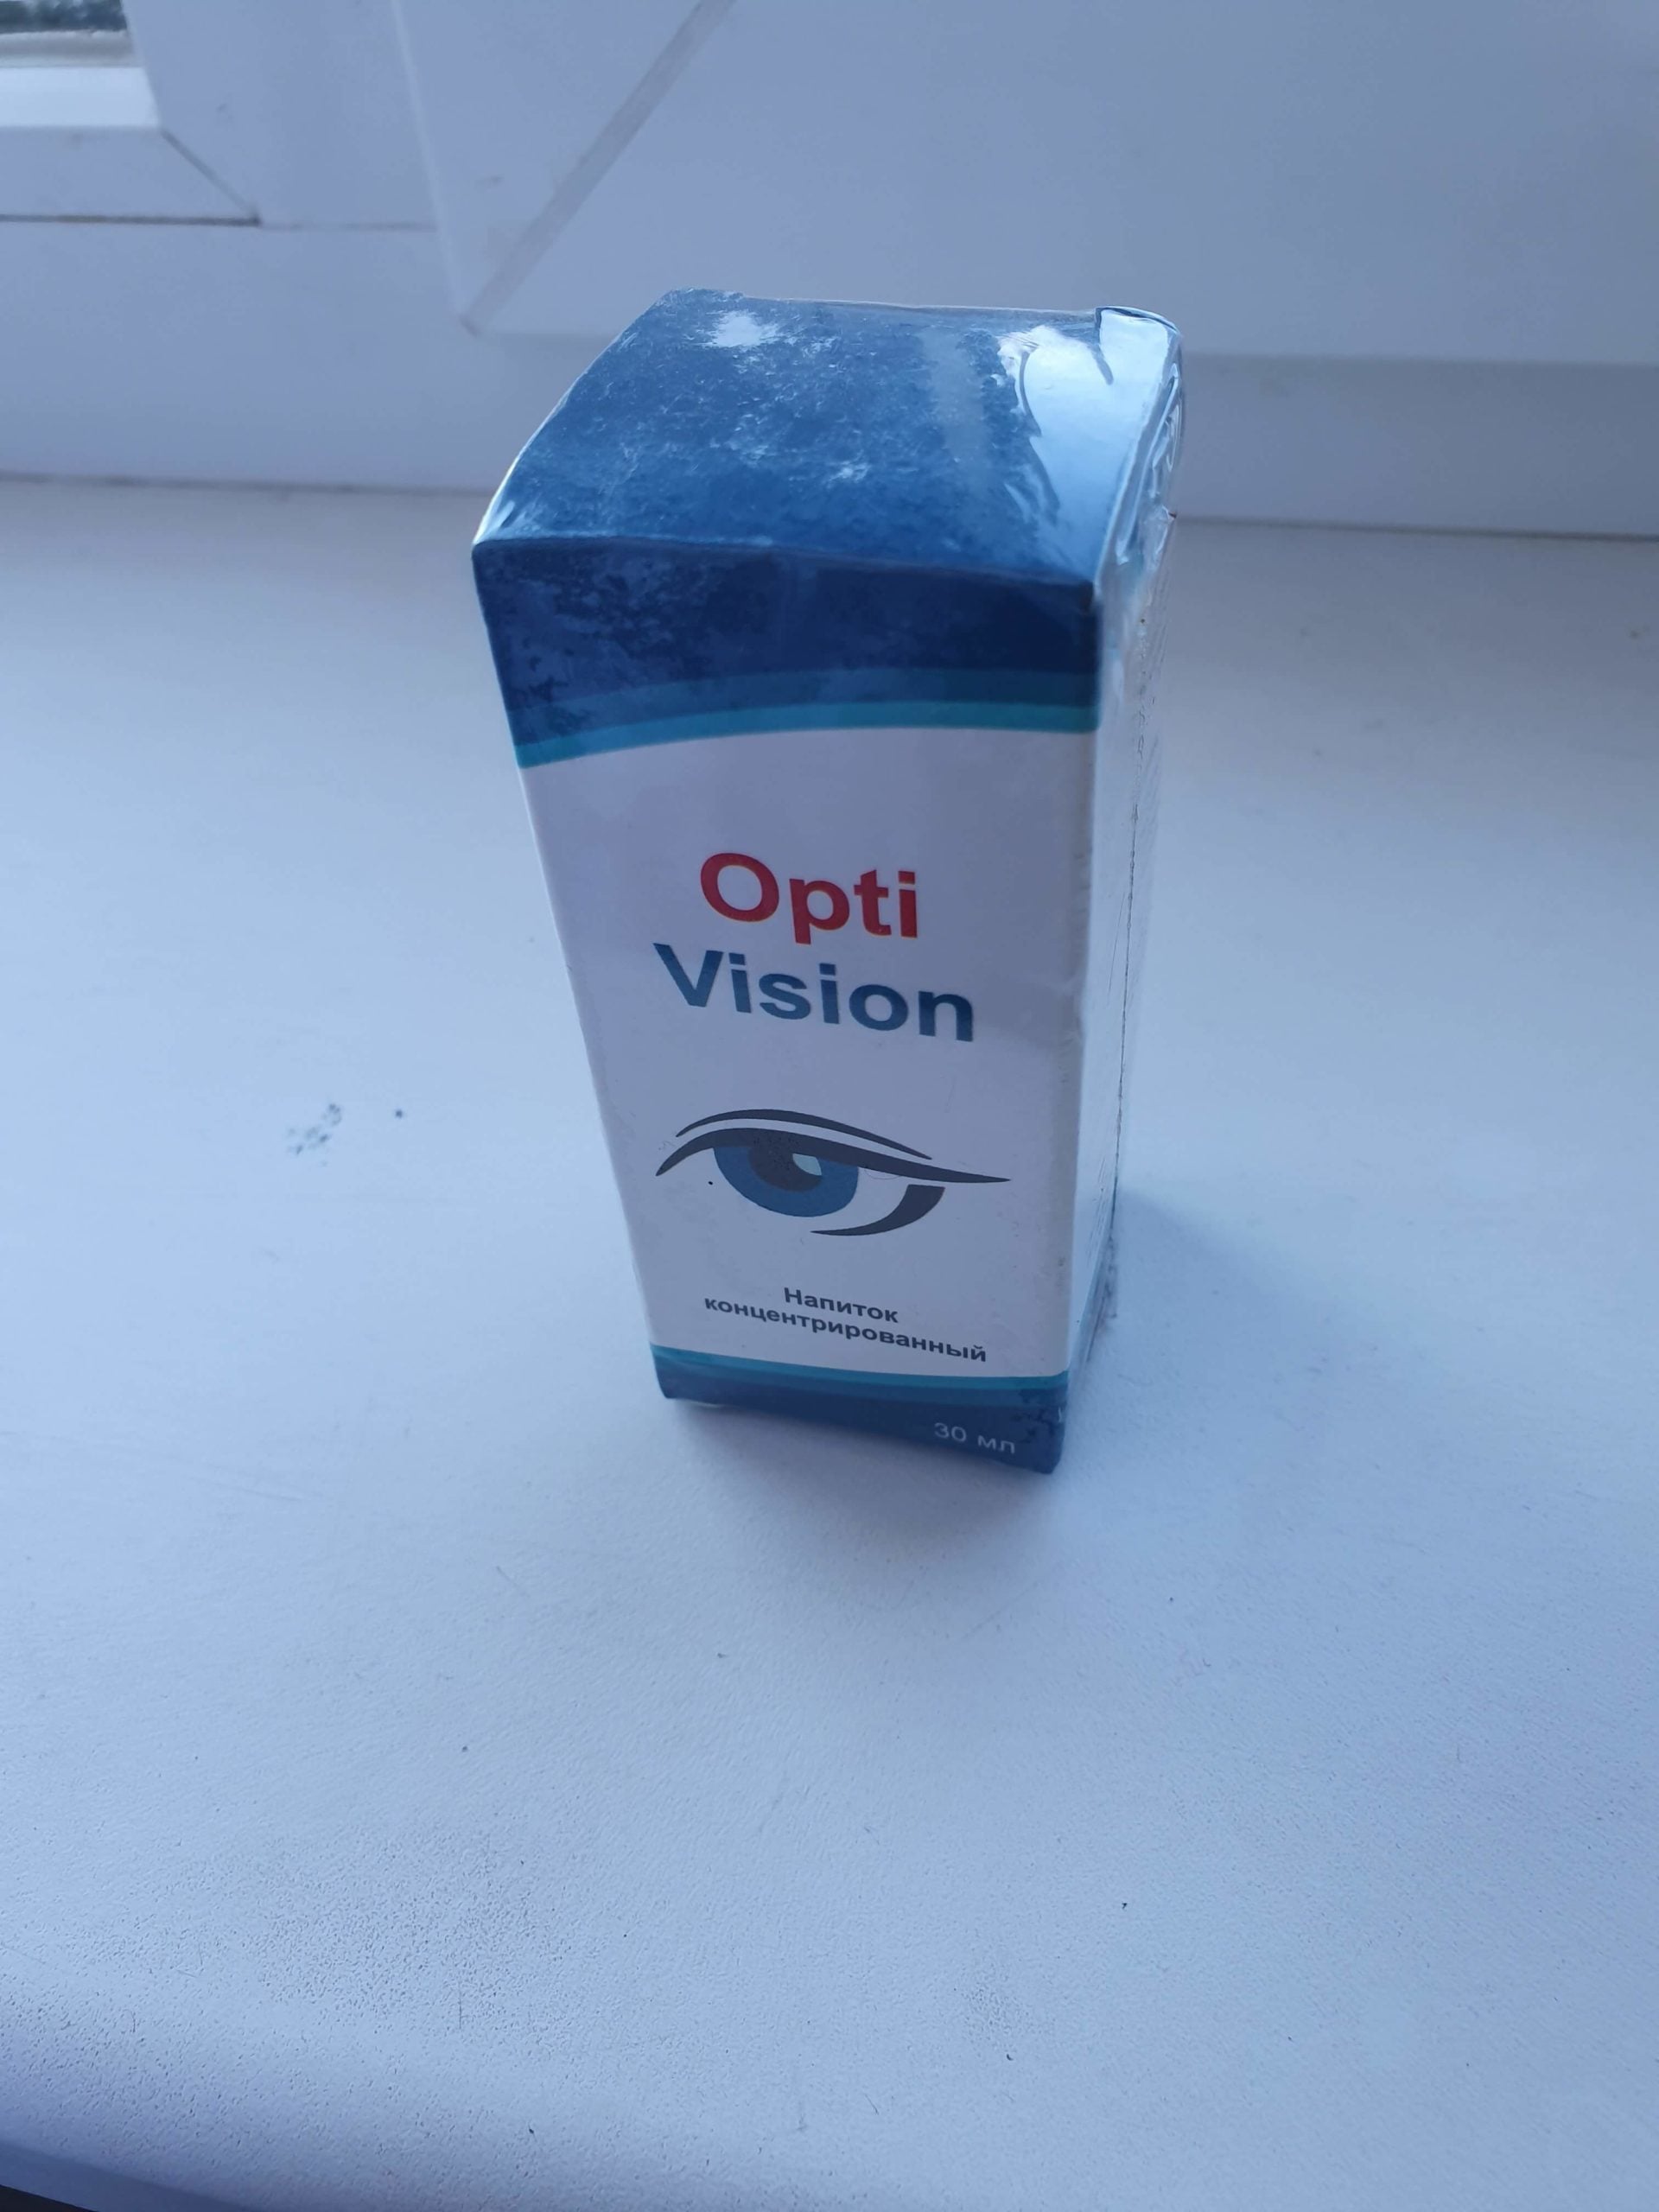 ActiVision και optivision να αποκαταστήσει την όραση και να θεραπεύσει τις ασθένειες των ματιών